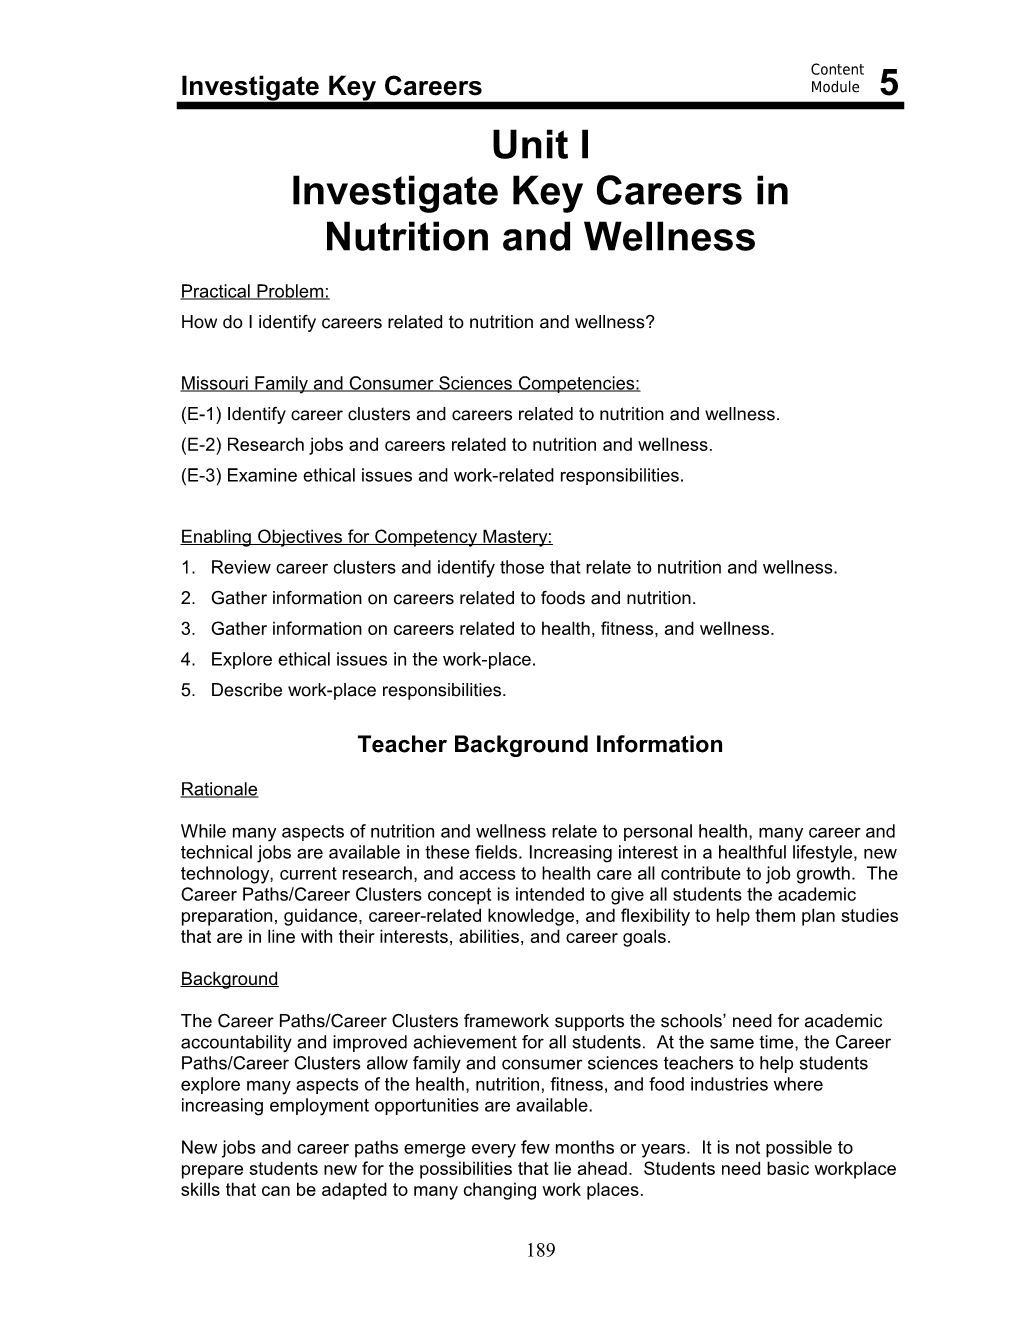 Investigate Key Careers In